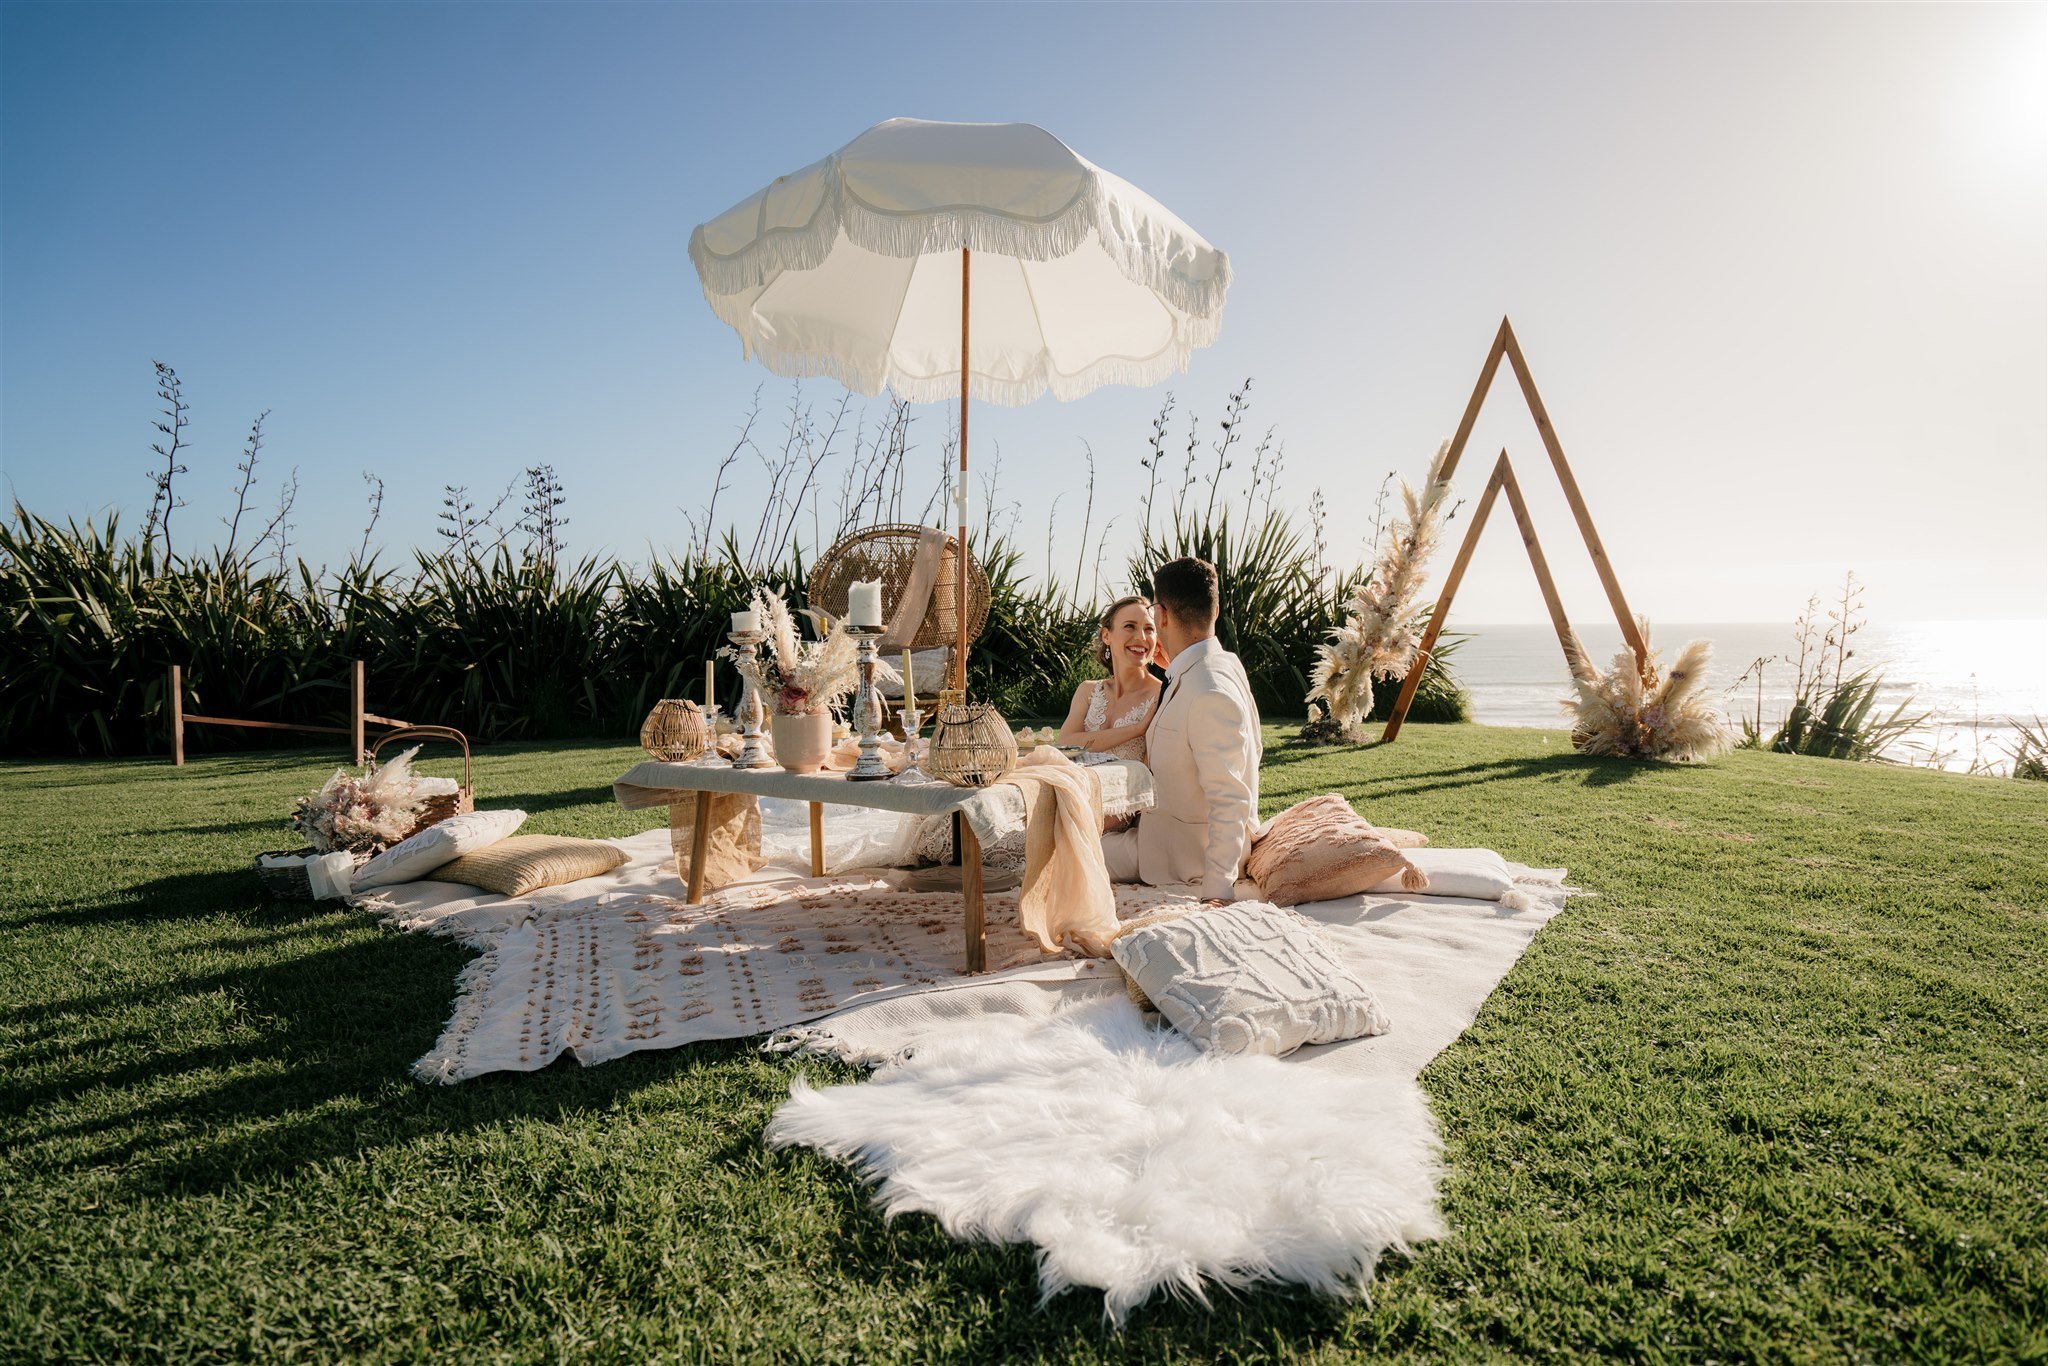 castaways-NZ-new-zealand-auckland-wedding-photographer-photography-videography-film-dear-white-productions-best-venue-waiuku-engagement-elopement-style-beach-intimate (269).jpg